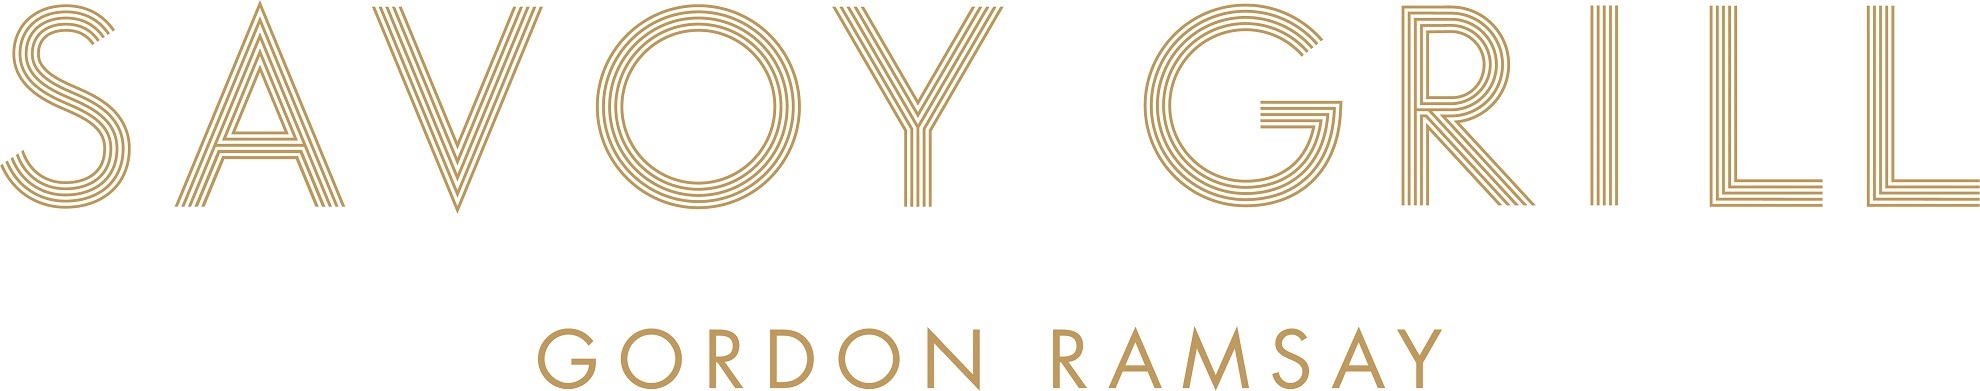 Le Savoy Grill by Gordon Ramsay